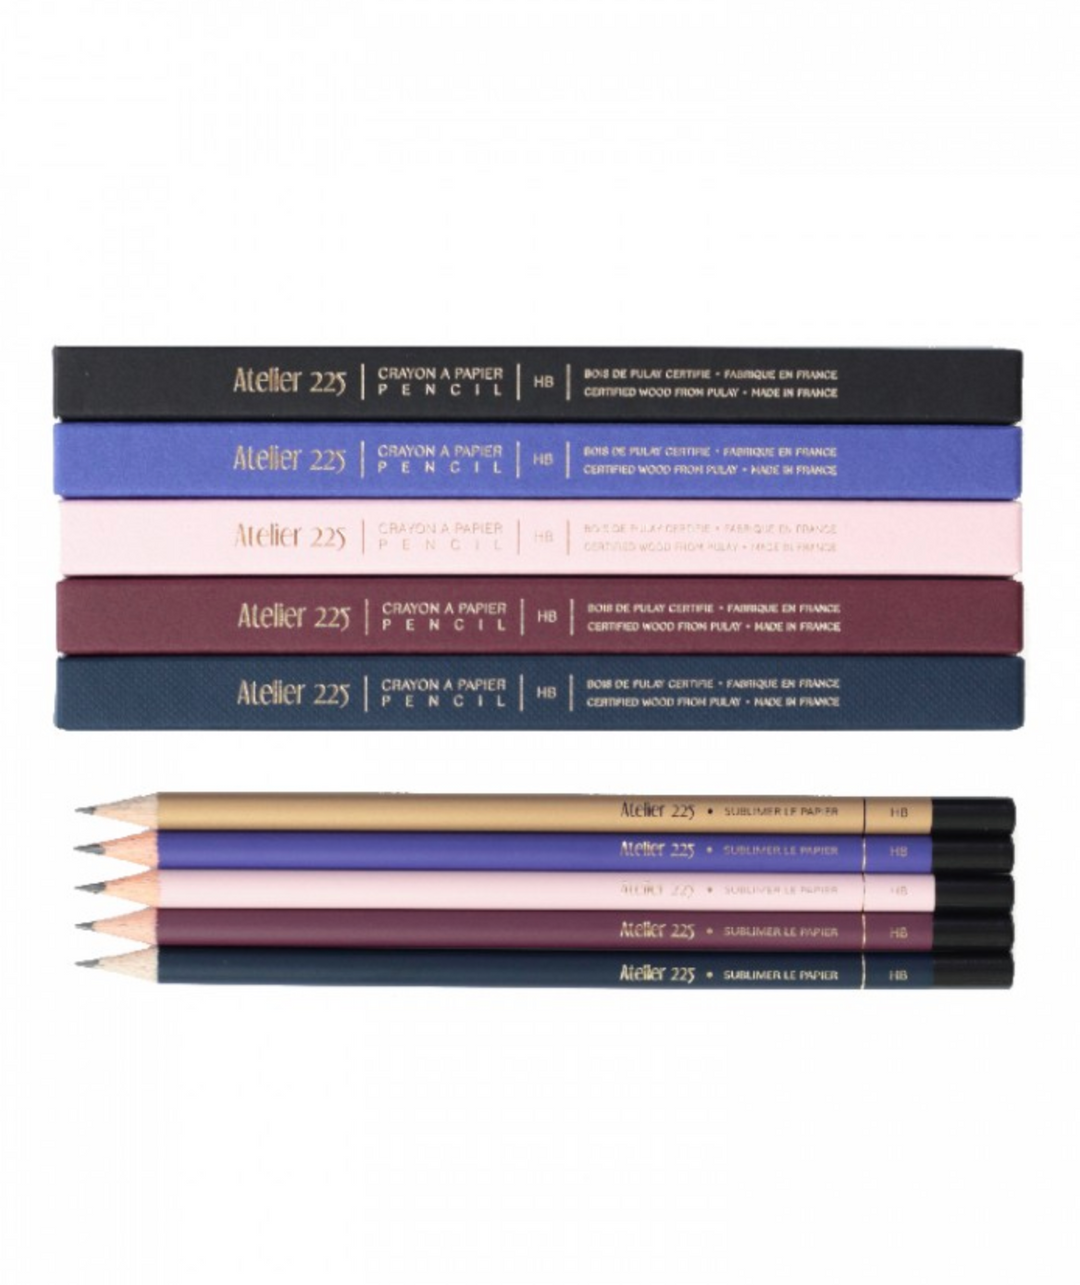 Atelier 225 - Crayon + Etui - 8" Assorted Color Boxed Pencils